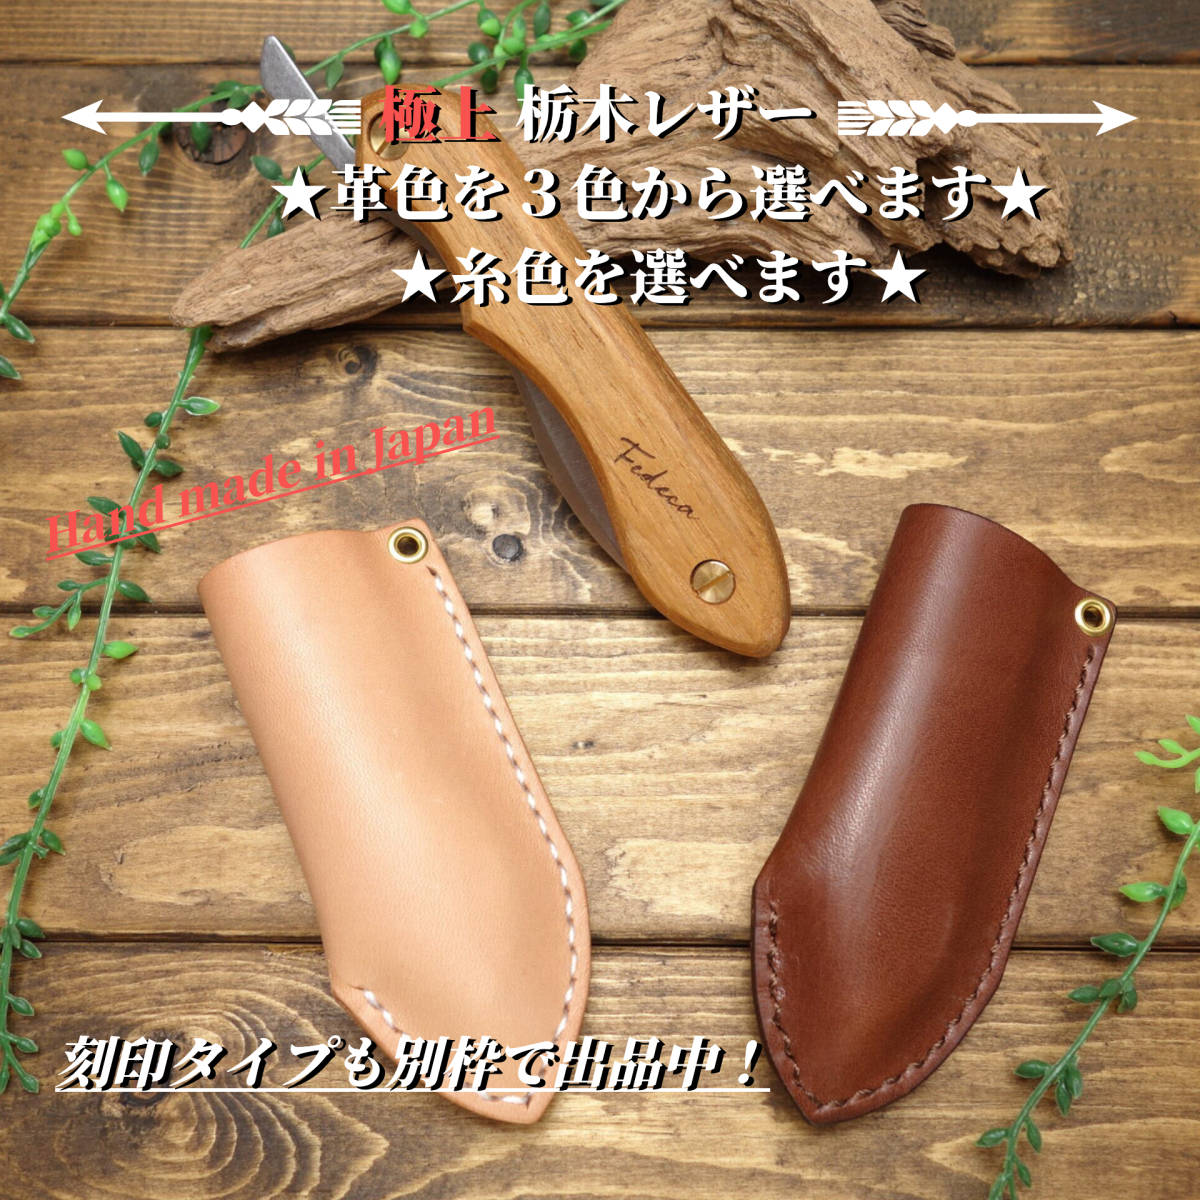 ** free shipping [ finest quality Tochigi leather ] total hand ..fedecafeteka knife sheath **